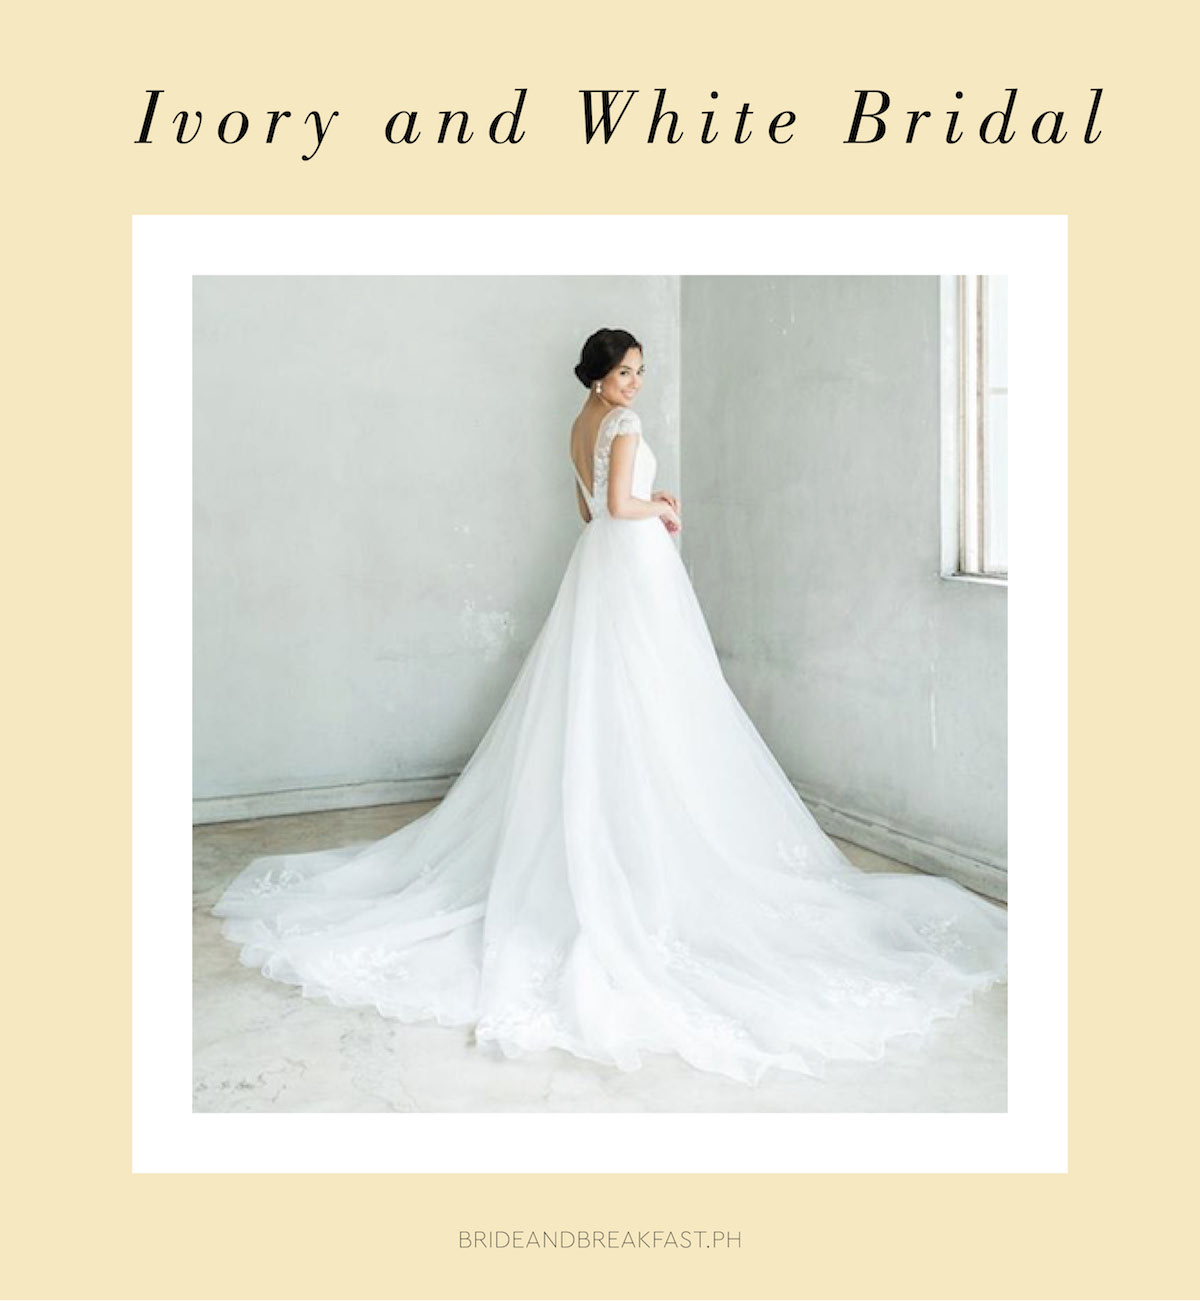 Ivory and White Bridal